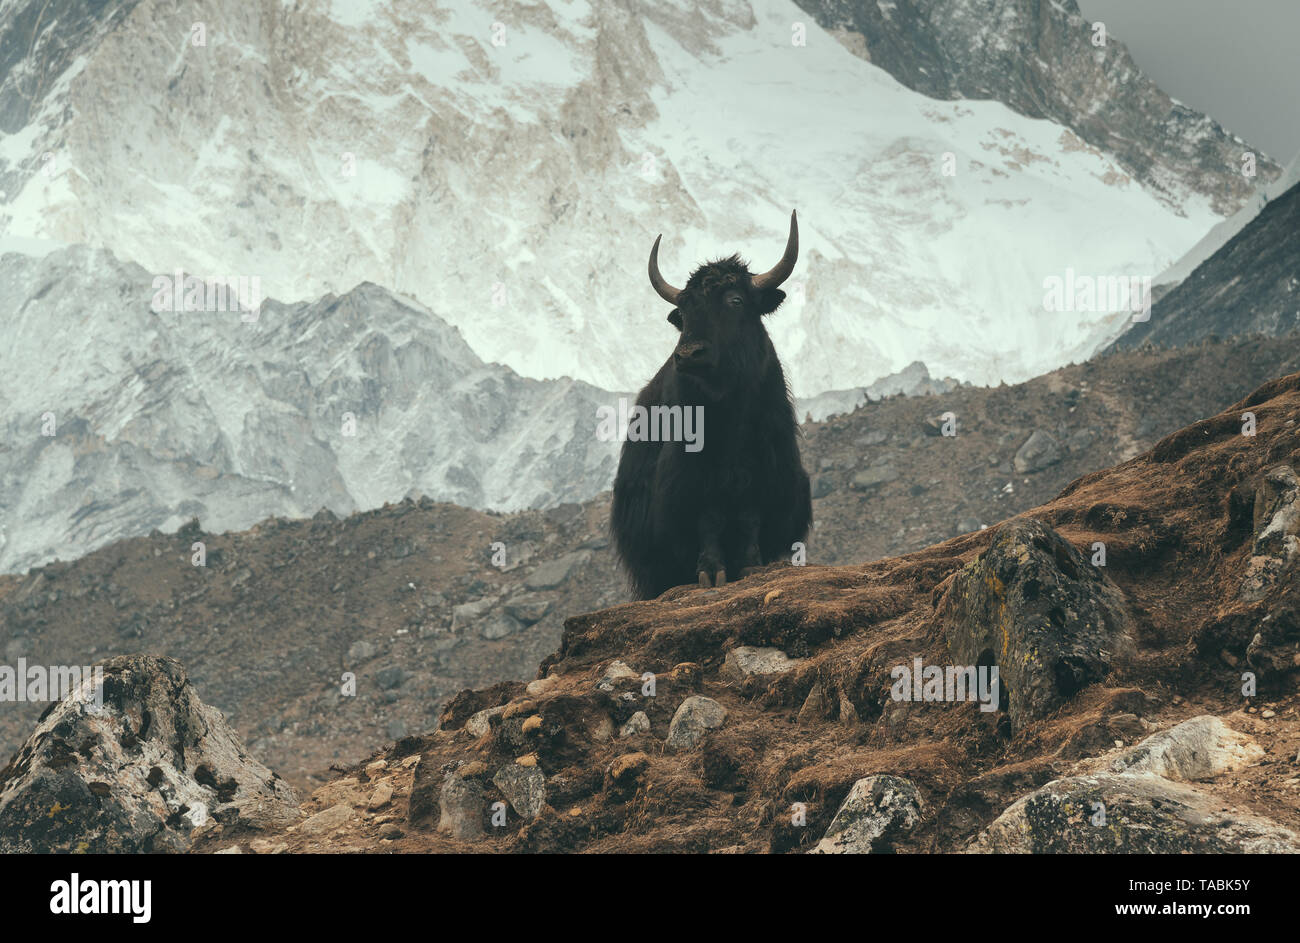 Yak vor der Kamera vor der Kulisse des Himalaya Gebirges. Stockfoto